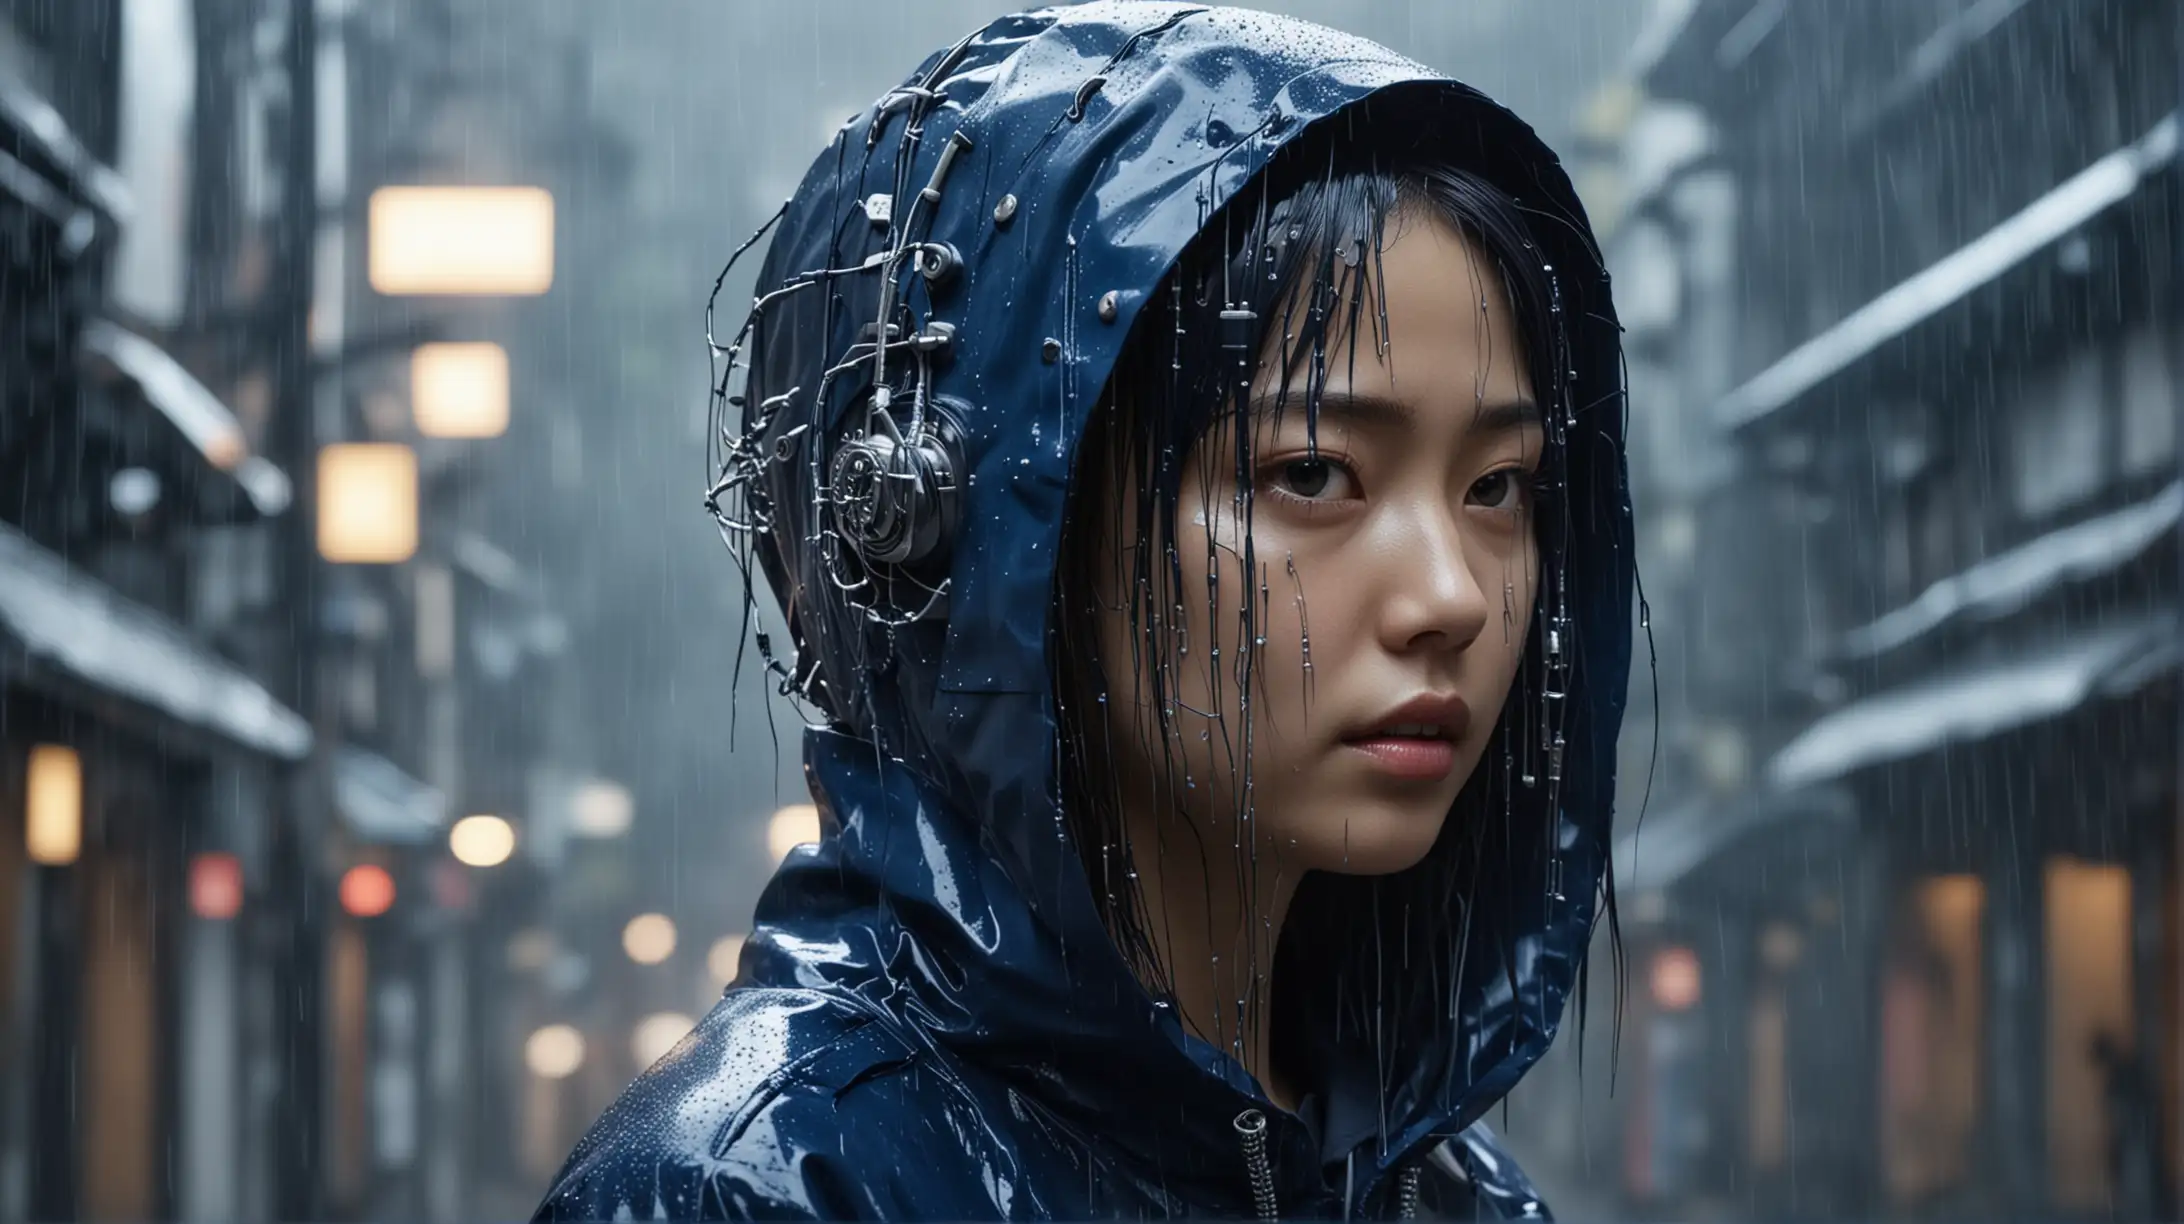 Cyberpunk Japanese Girl Walking in Rain with Cybernetic Implant